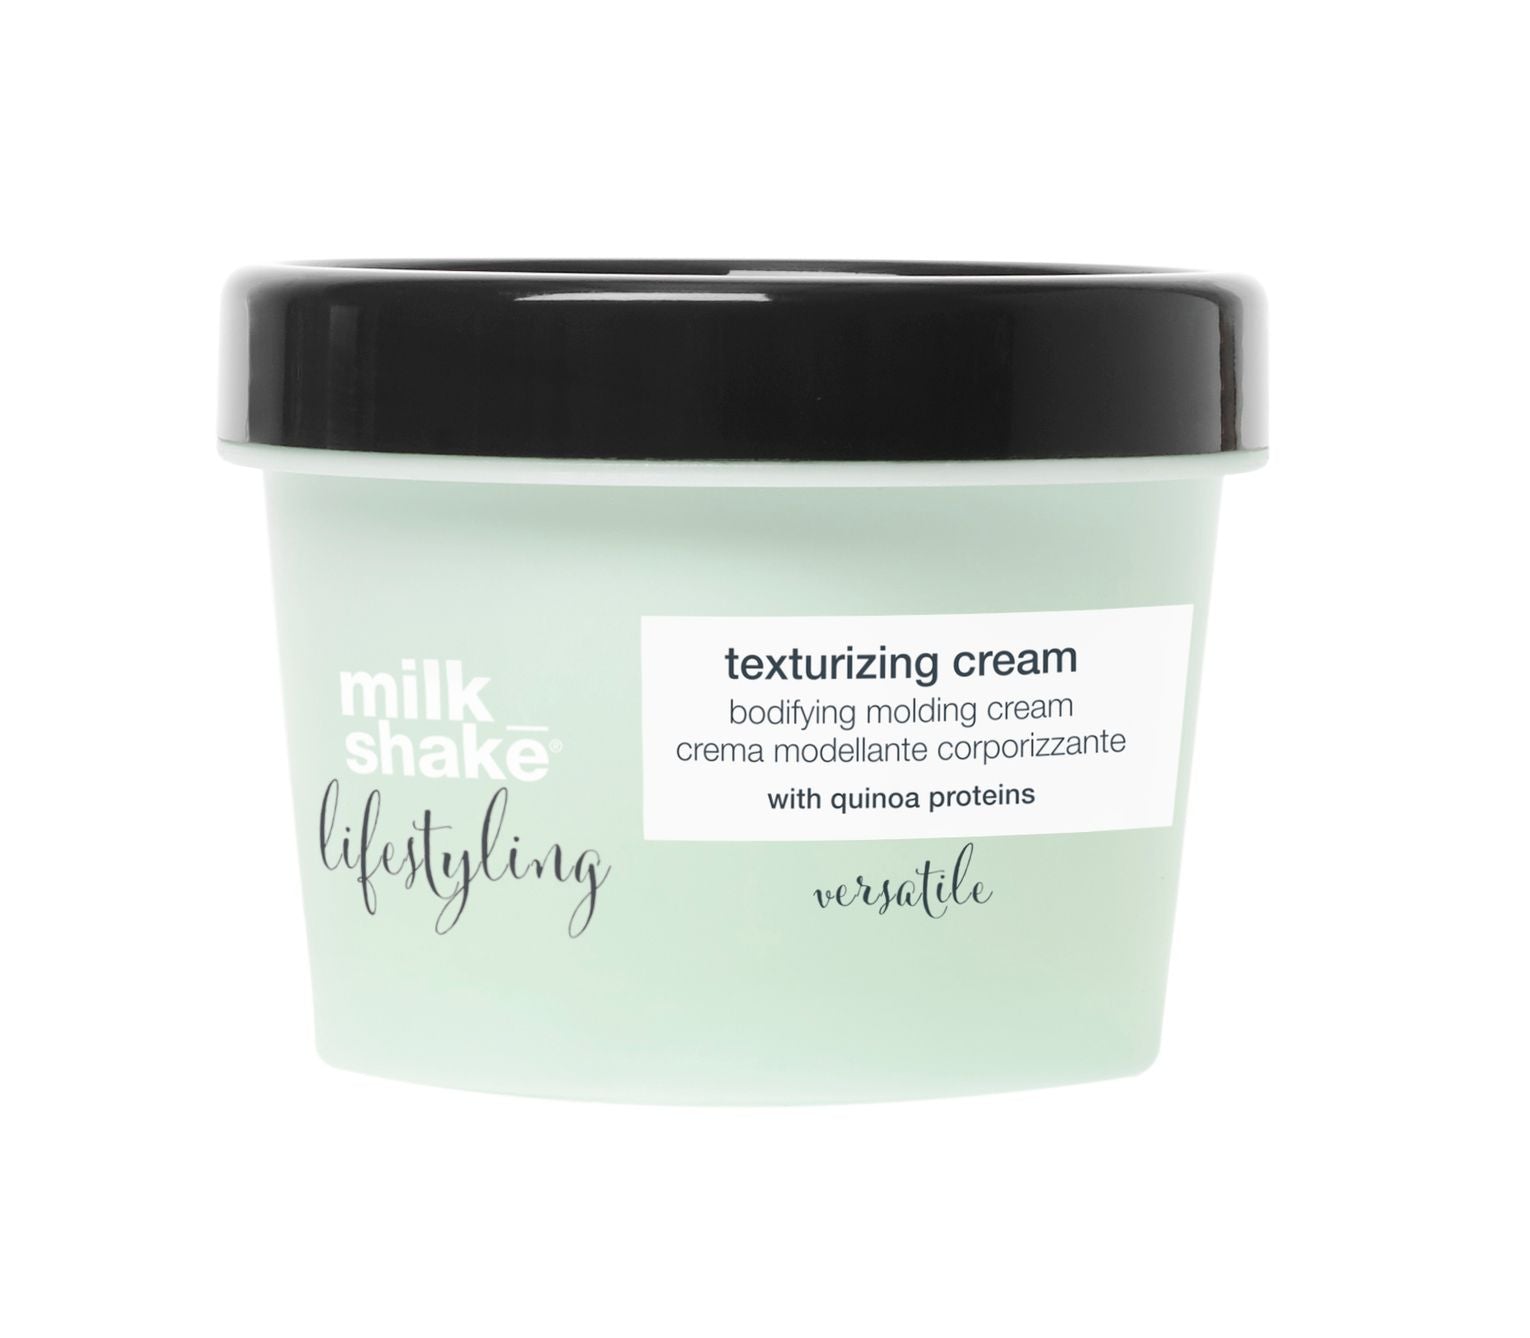 Milk Shake Lifestyling Texturizing Cream 100mL